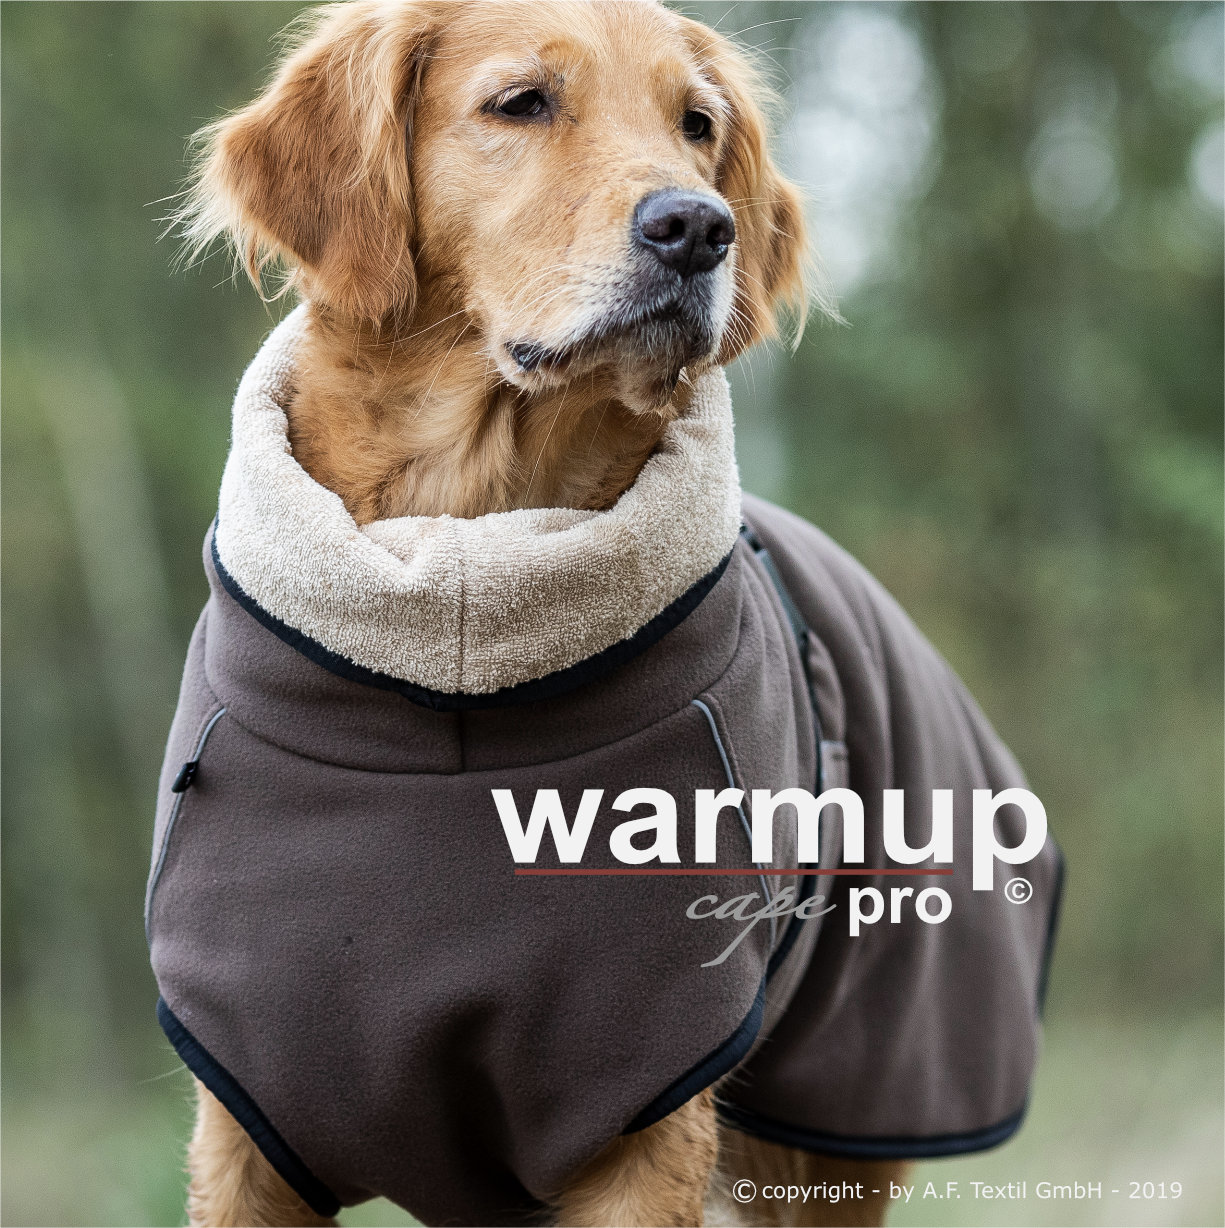 Warmup© cape pro mocca